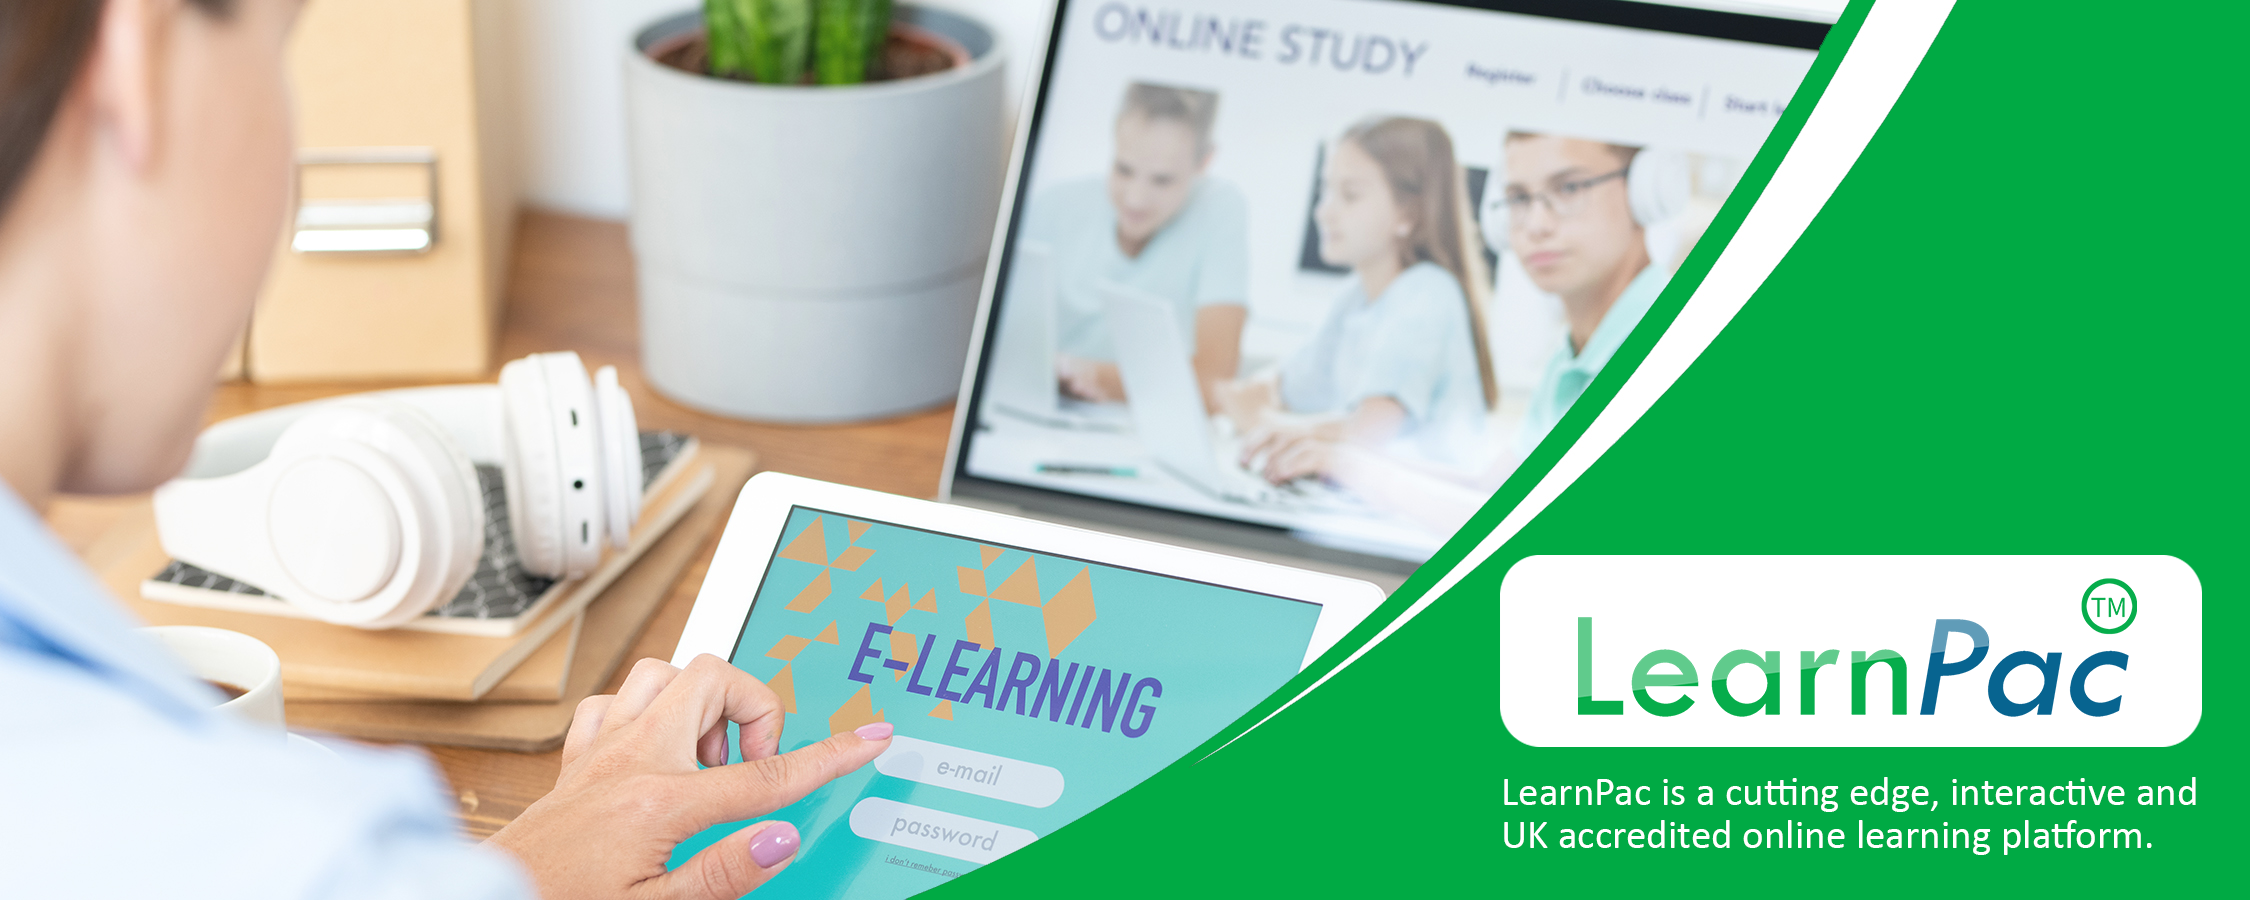 Business Succession Planning Training - Online Learning Courses - E-Learning Courses - LearnPac Systems UK -